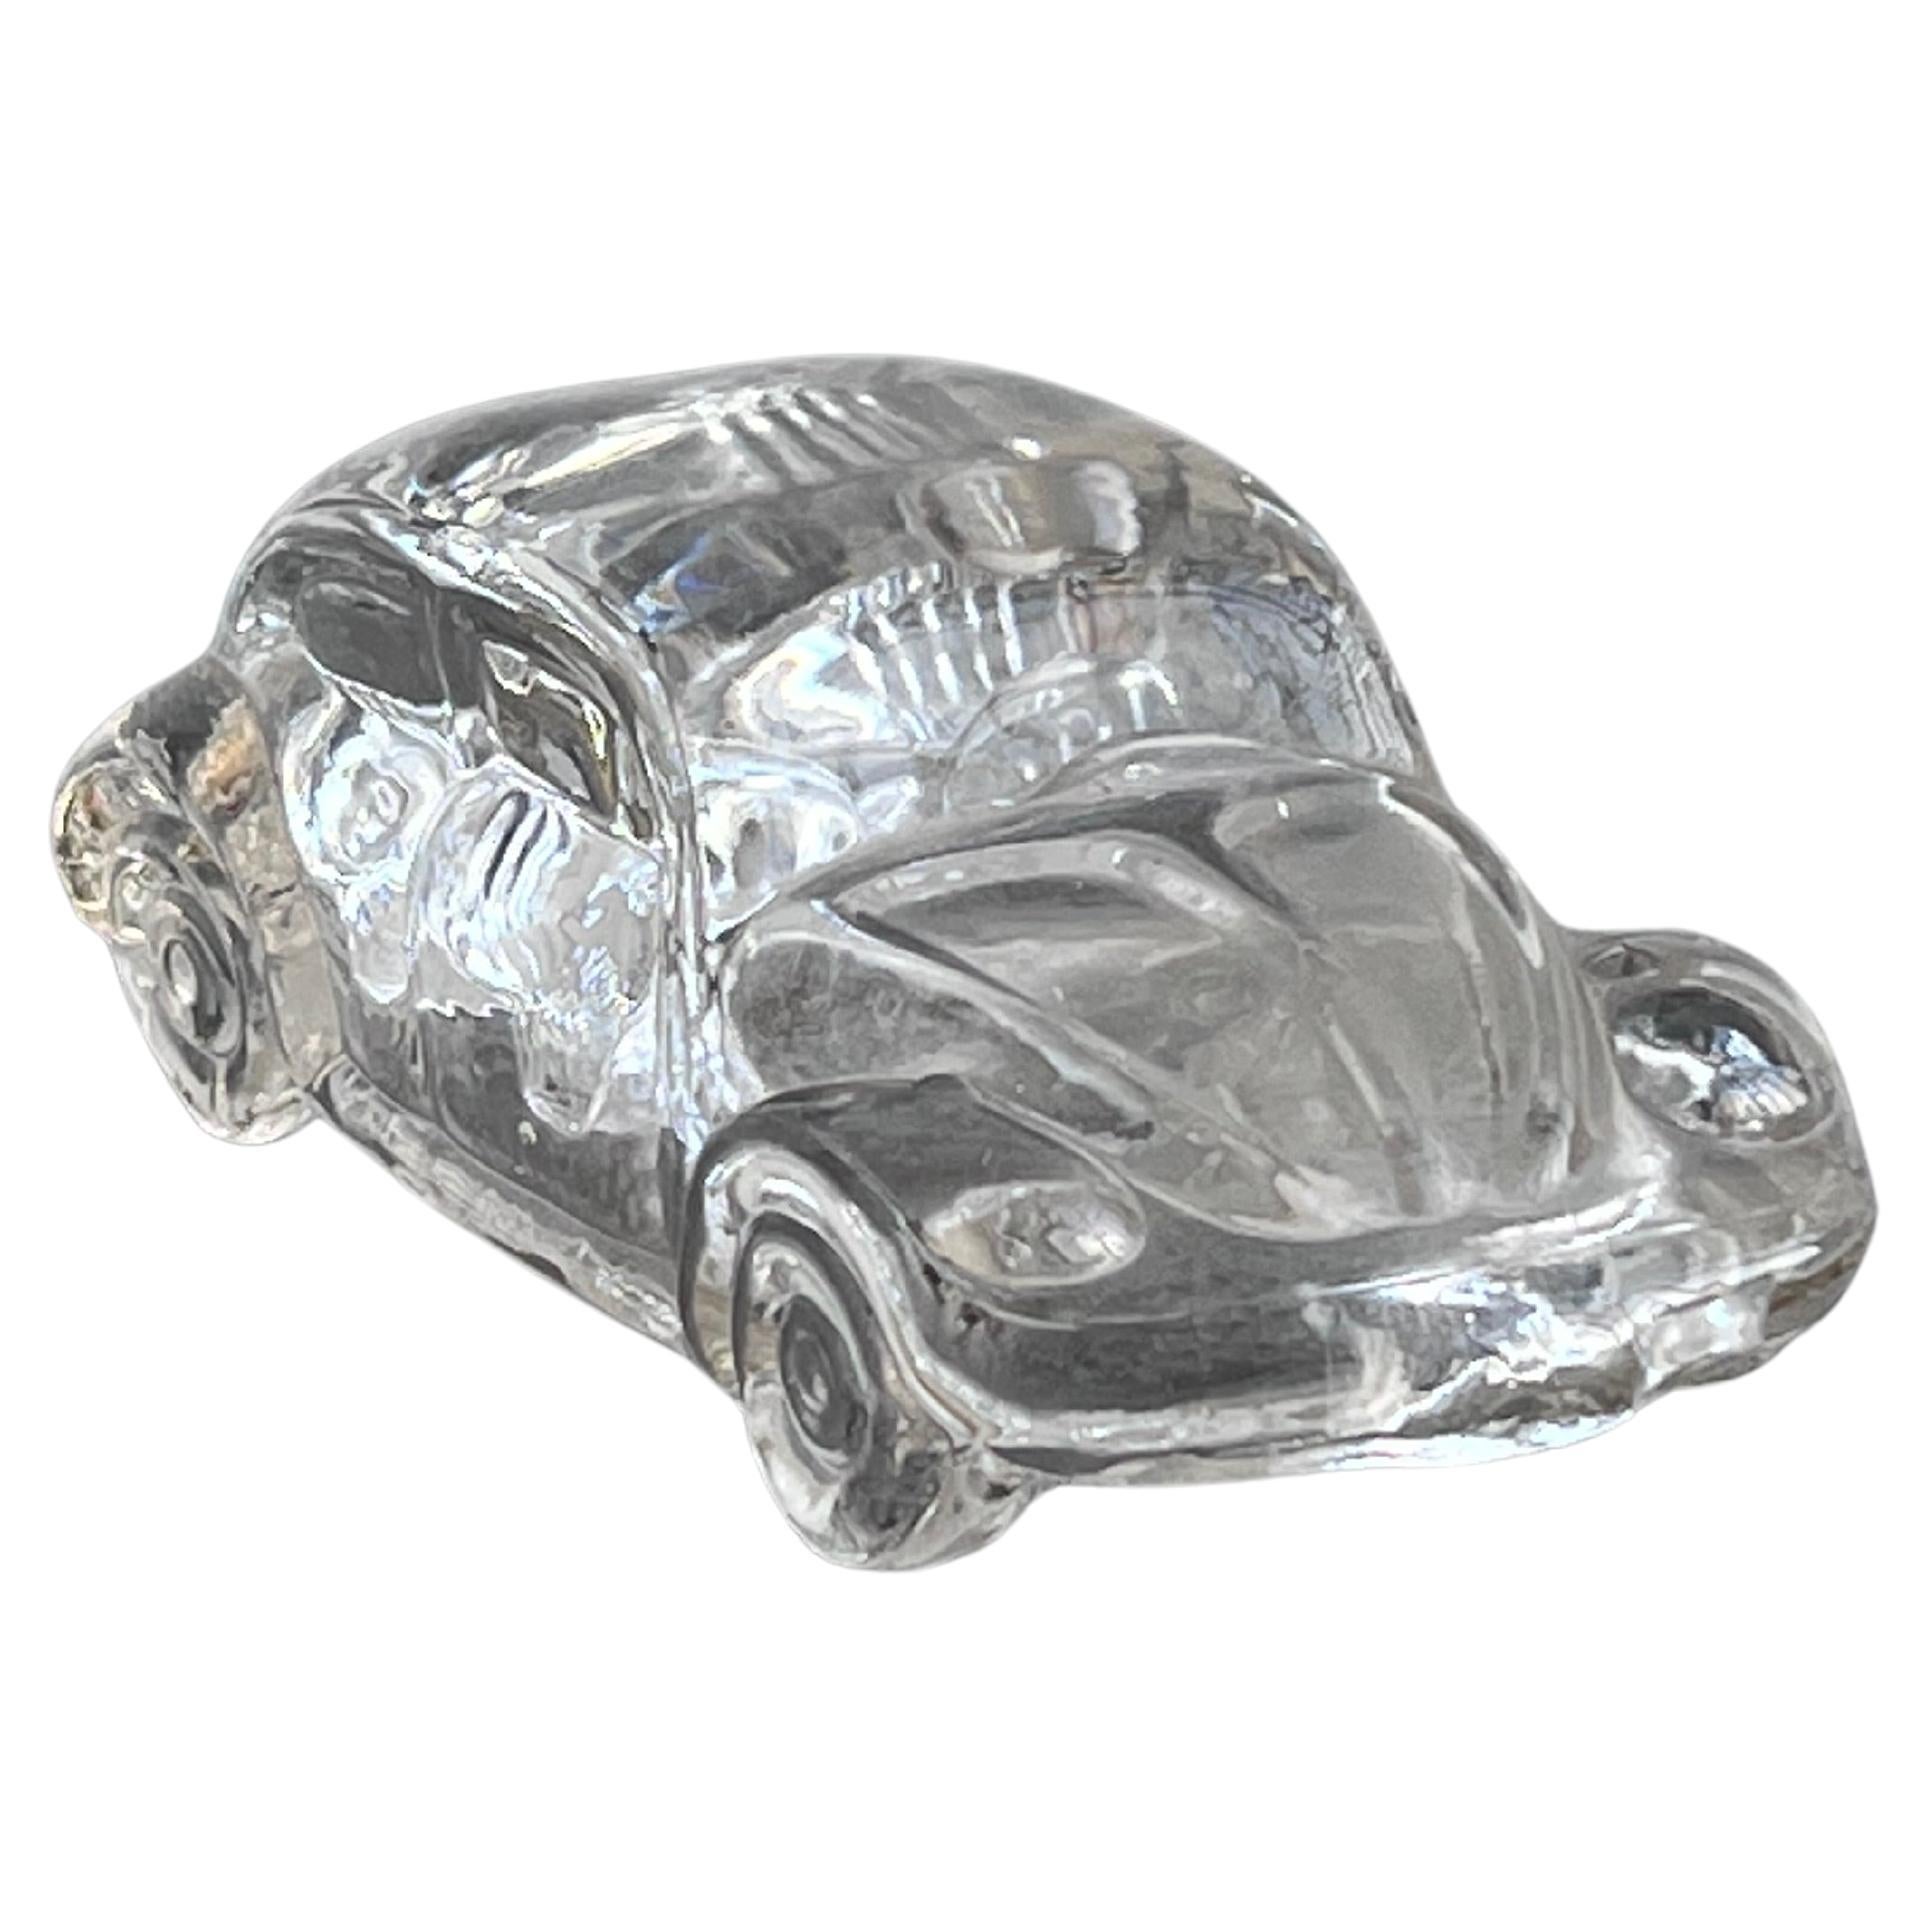 Vintage Clear Glass Sculpture of a Classic Volkswagen Beetle, Car Memorabilia For Sale